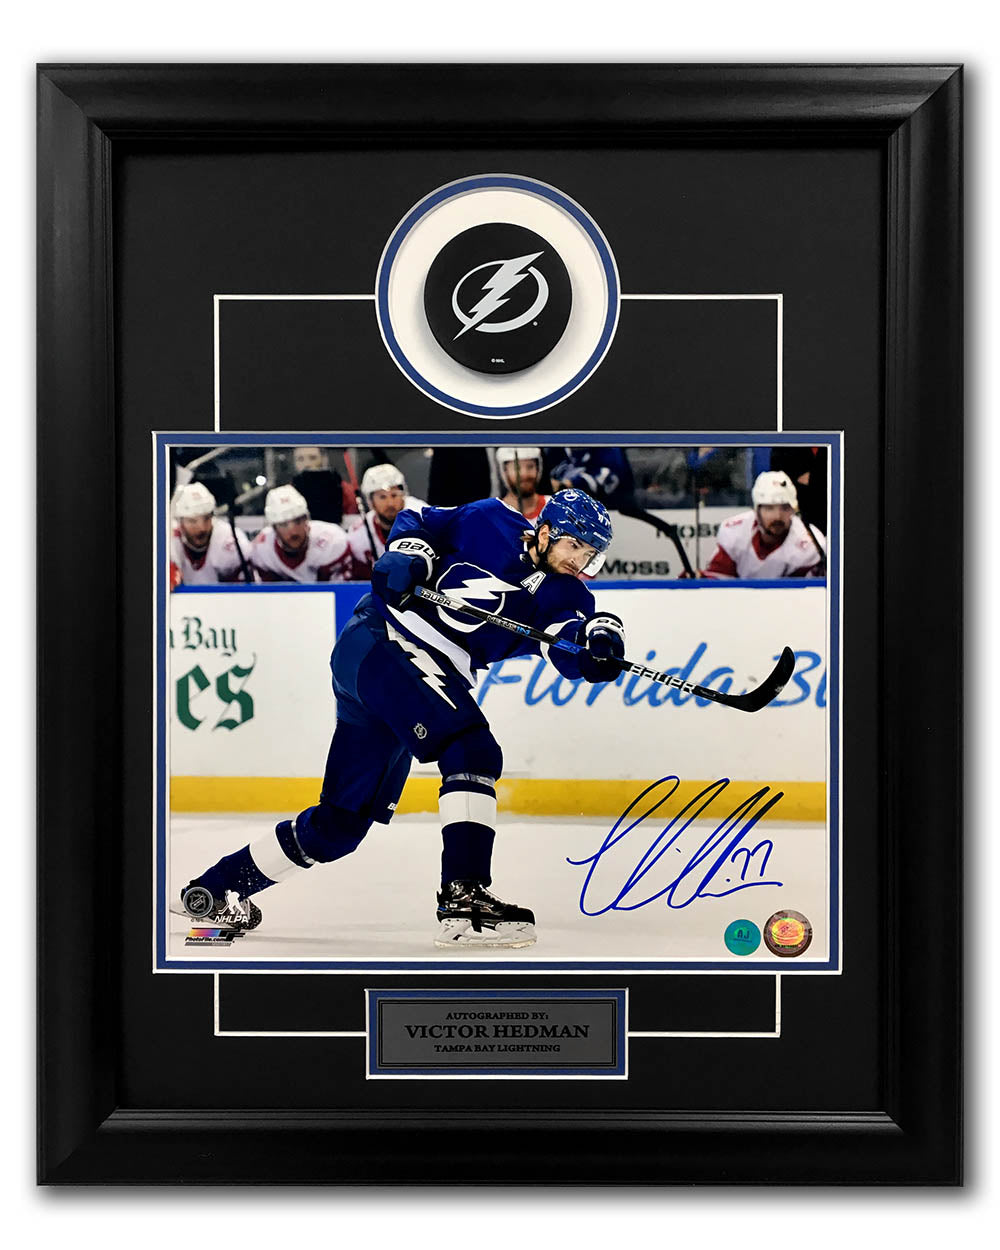 Hall of Fame Sports Memorabilia Autographed/Signed Anthony Cirelli Tampa Bay Blue Hockey Jersey JSA COA